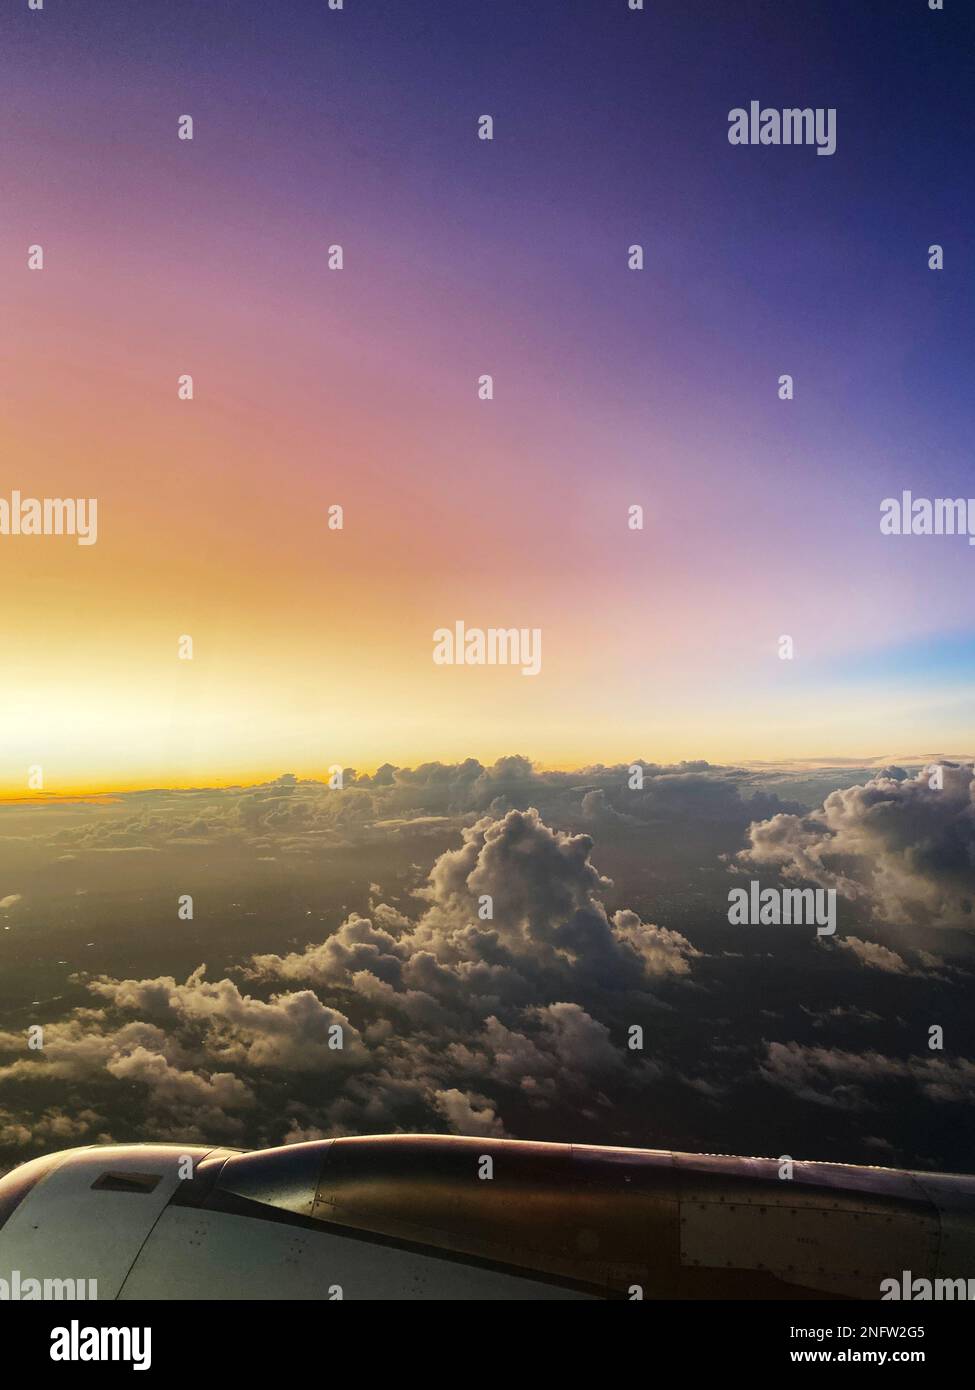 Sunset through the airplane window. Stock Photo